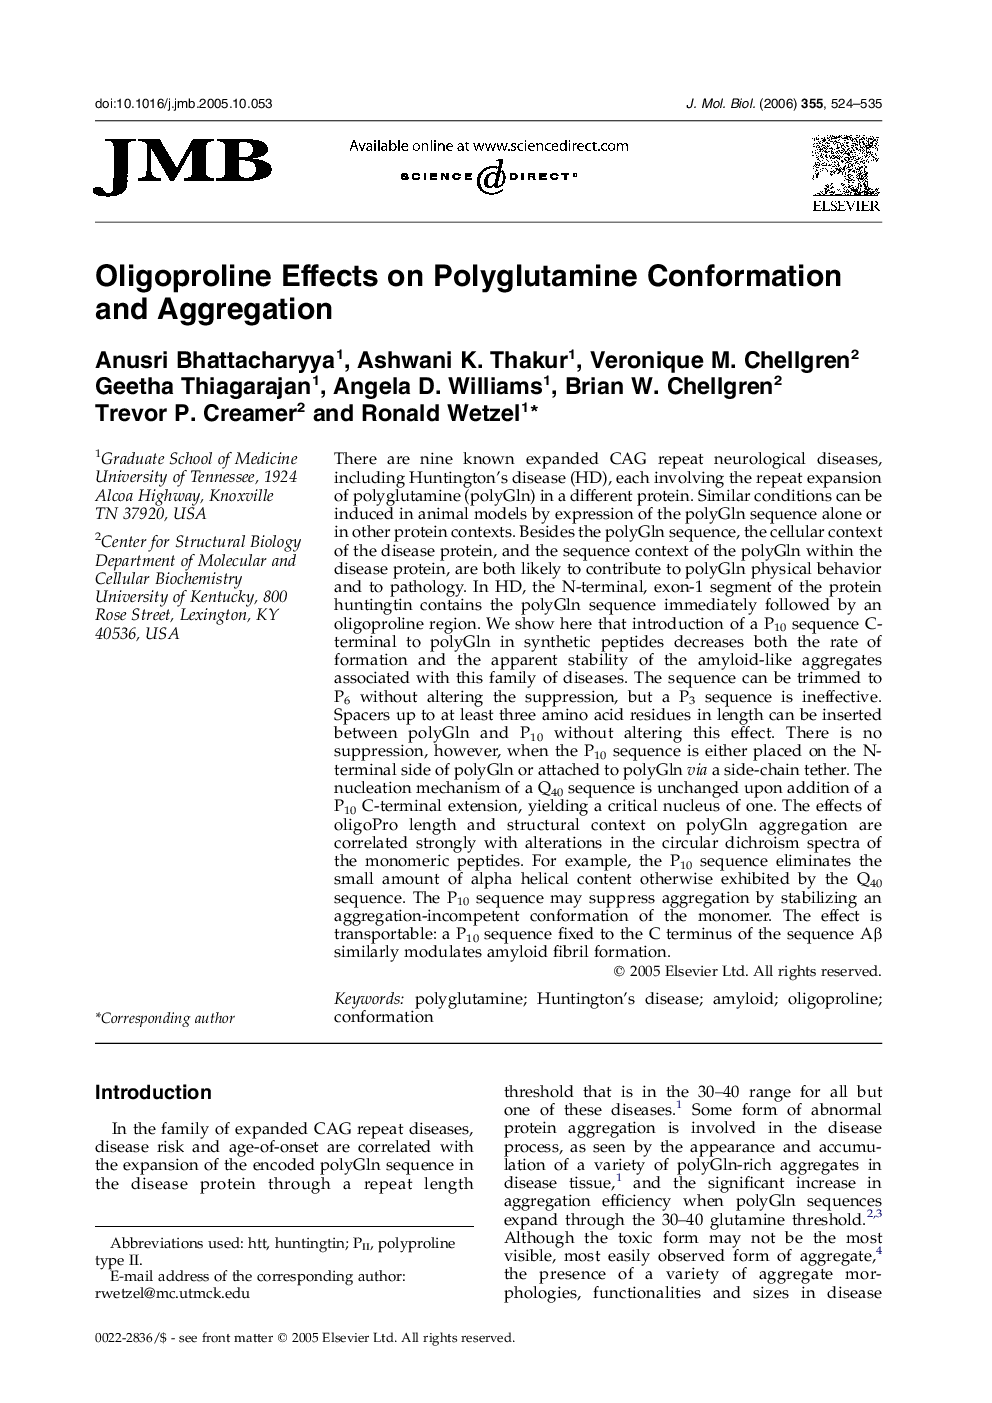 Oligoproline Effects on Polyglutamine Conformation and Aggregation